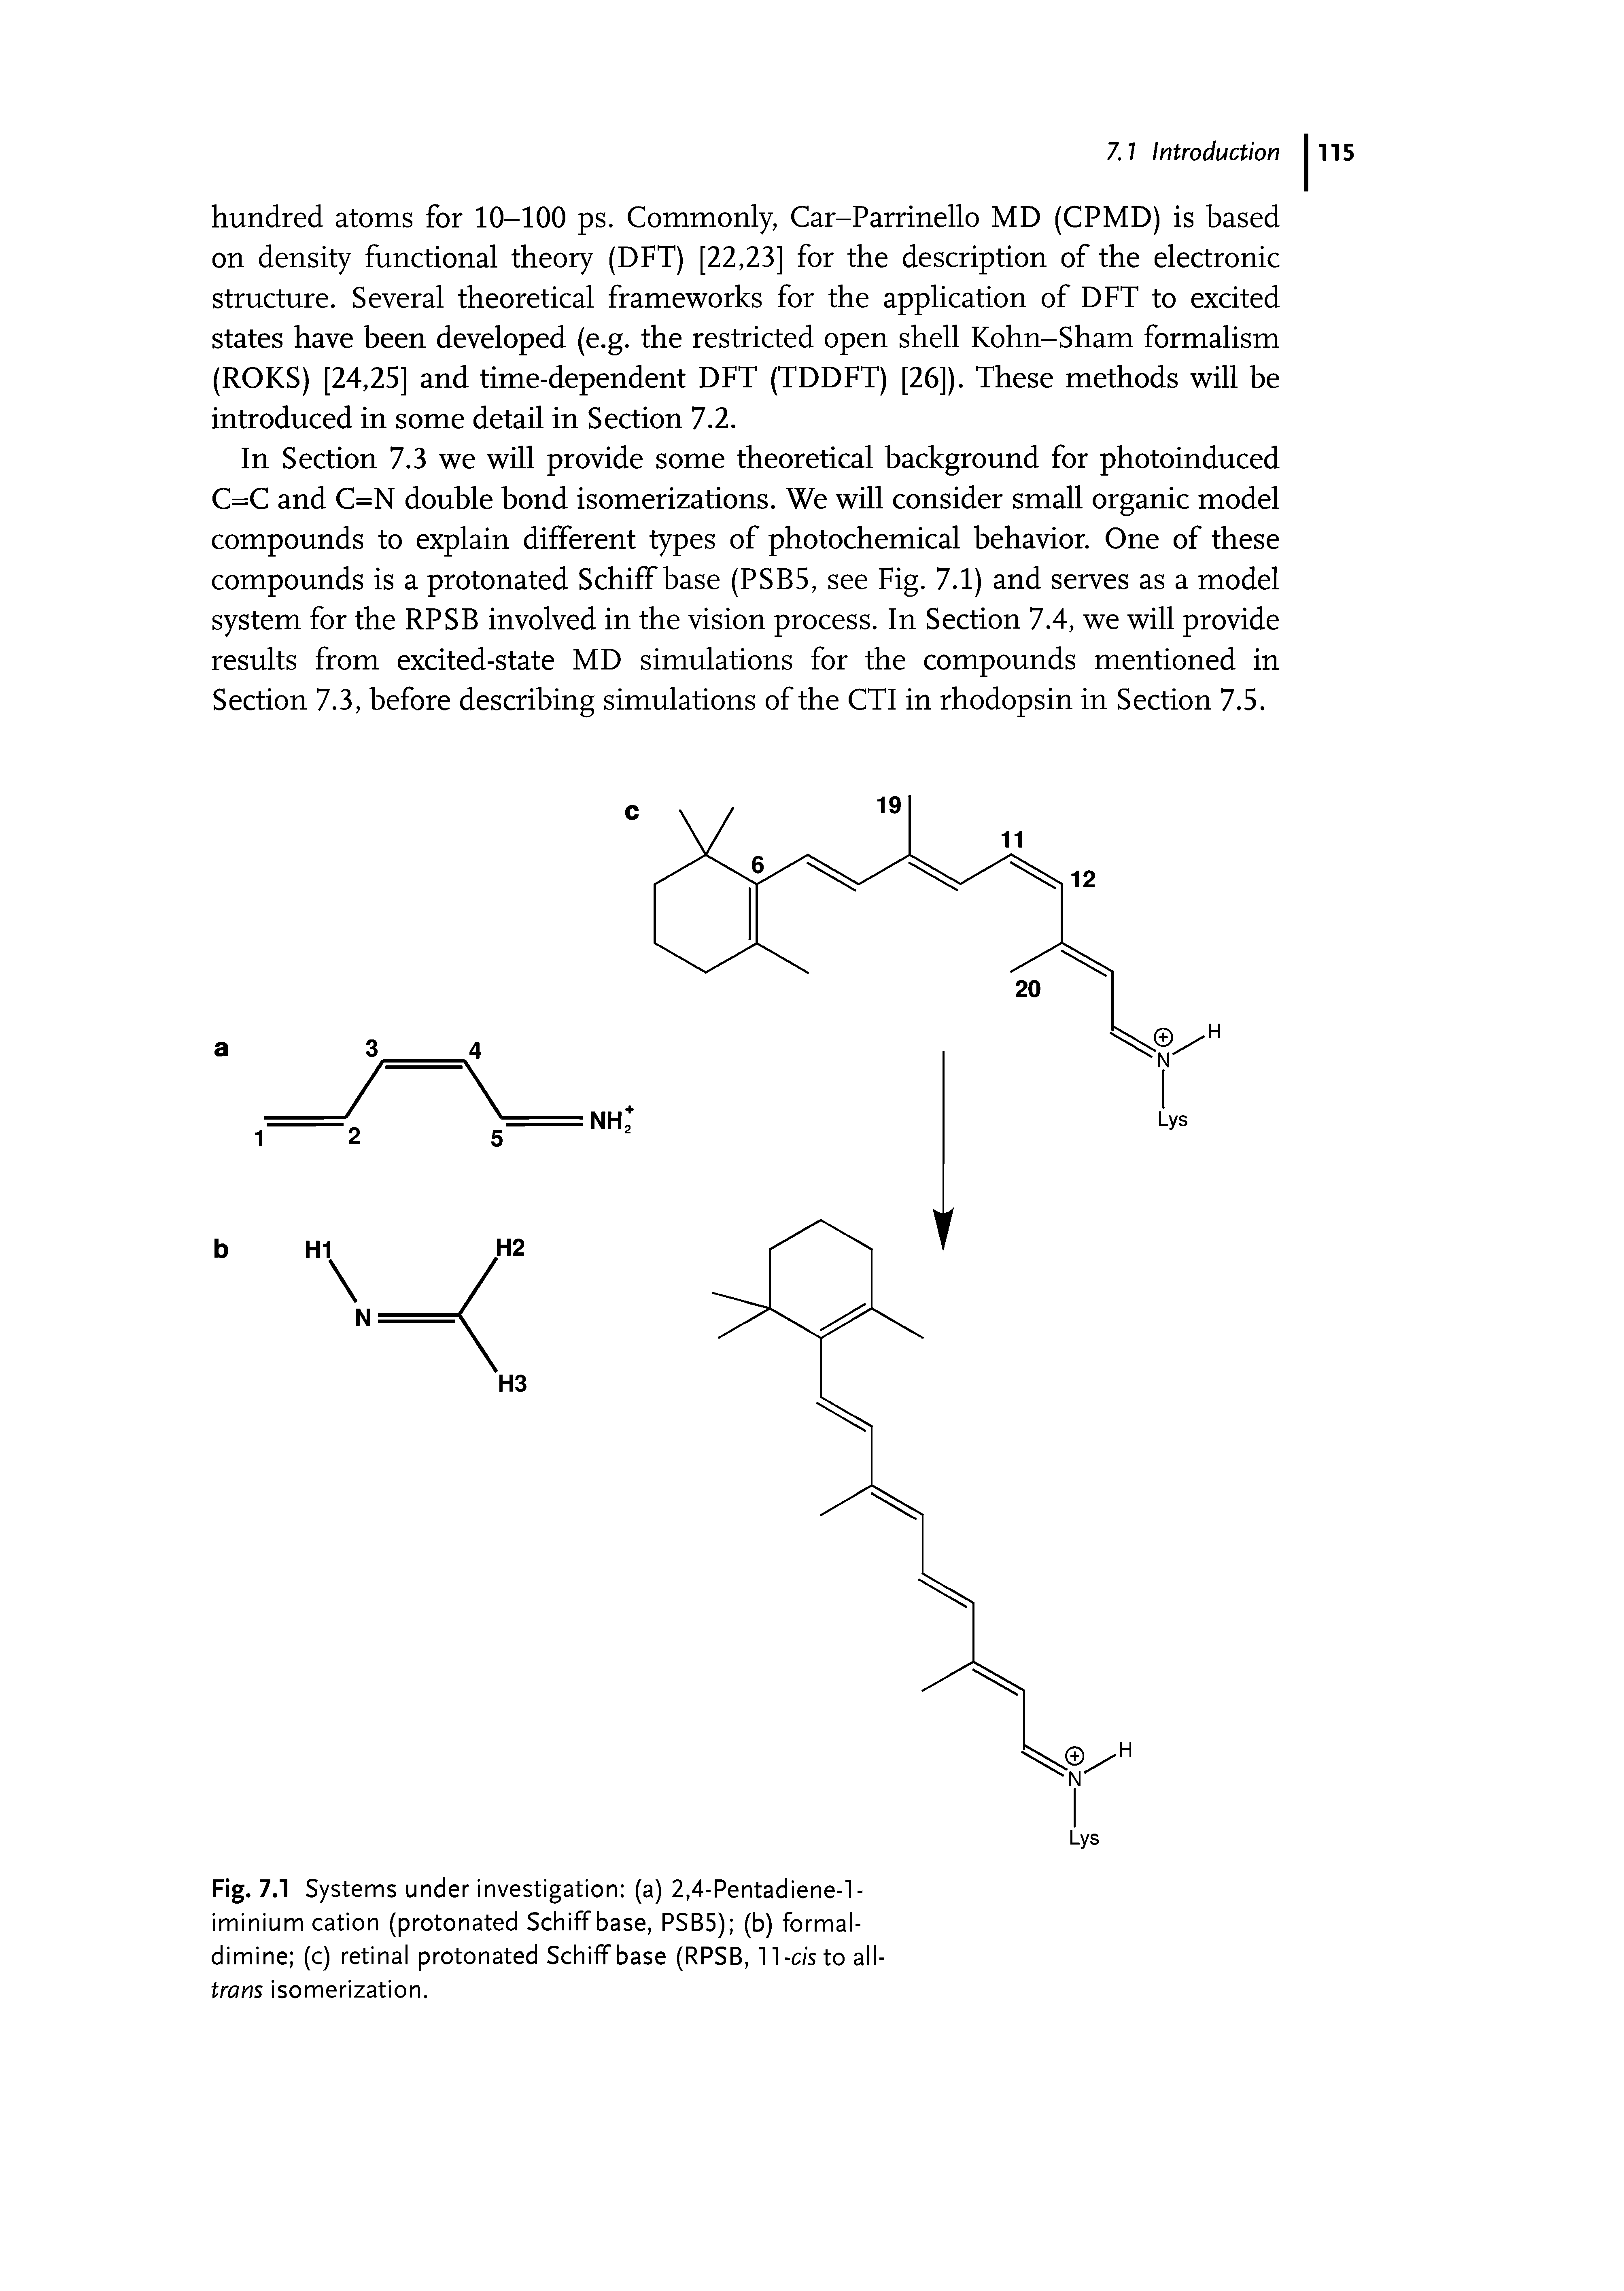 Fig. 7.1 Systems under investigation (a) 2,4-Pentadiene-l-iminium cation (protonated Schiff base, PSB5) (b) formal-dimine (c) retinal protonated Schiff base (RPSB, 11-c/sto all-trans isomerization.